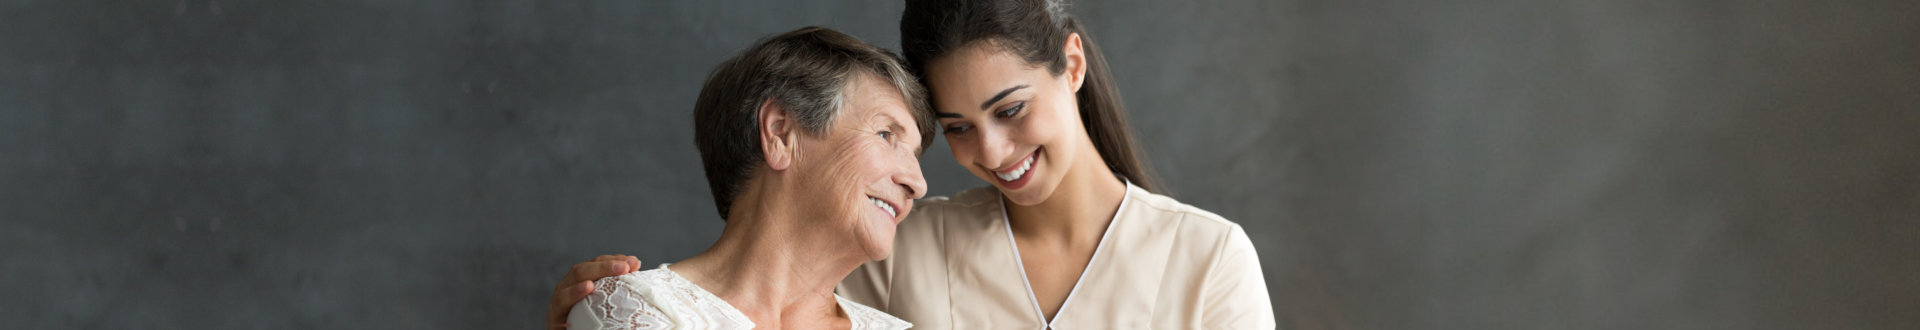 senior woman with female caregiver smiling